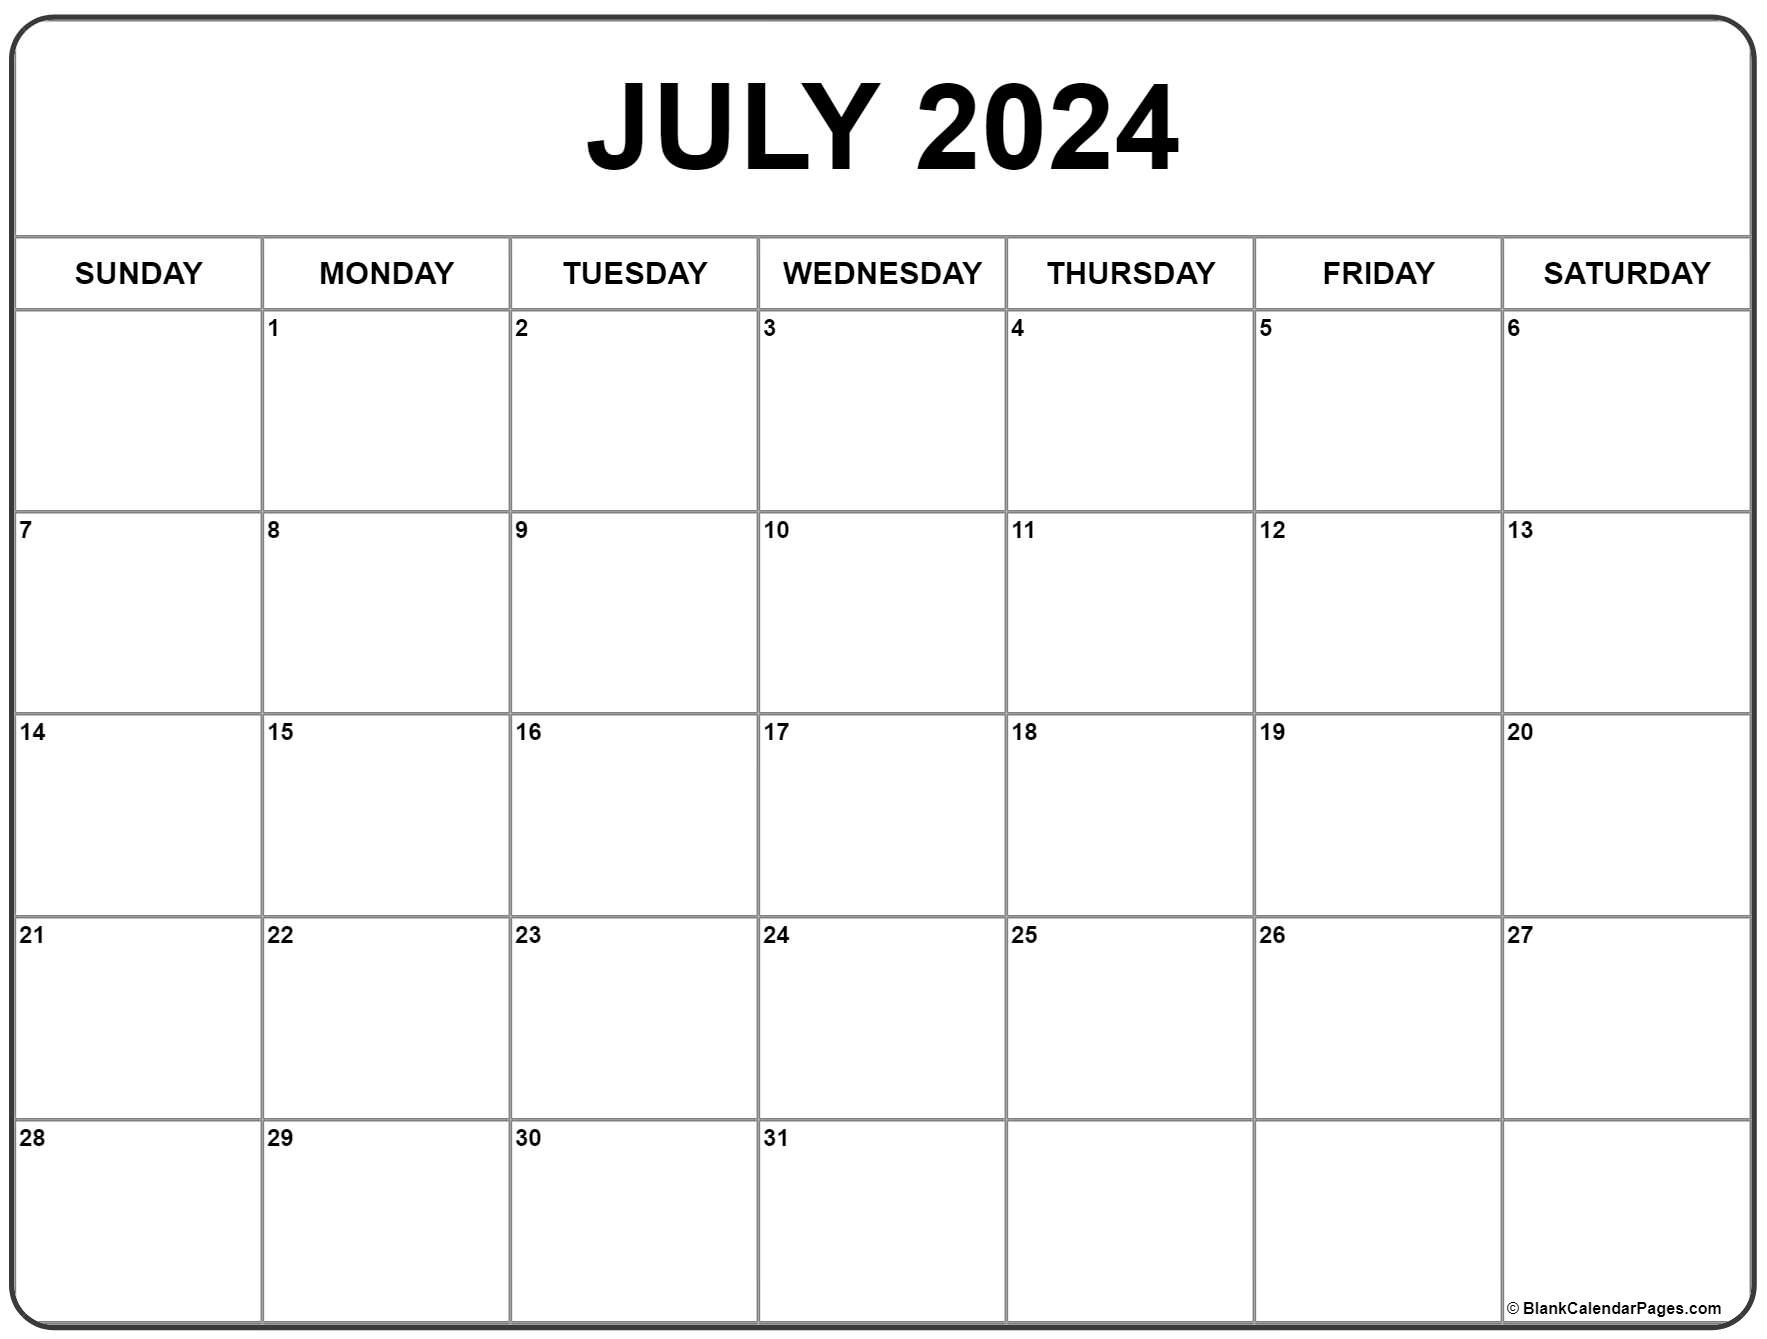 July 2024 Calendar | Free Printable Calendar for July 2024 Calendar Printable